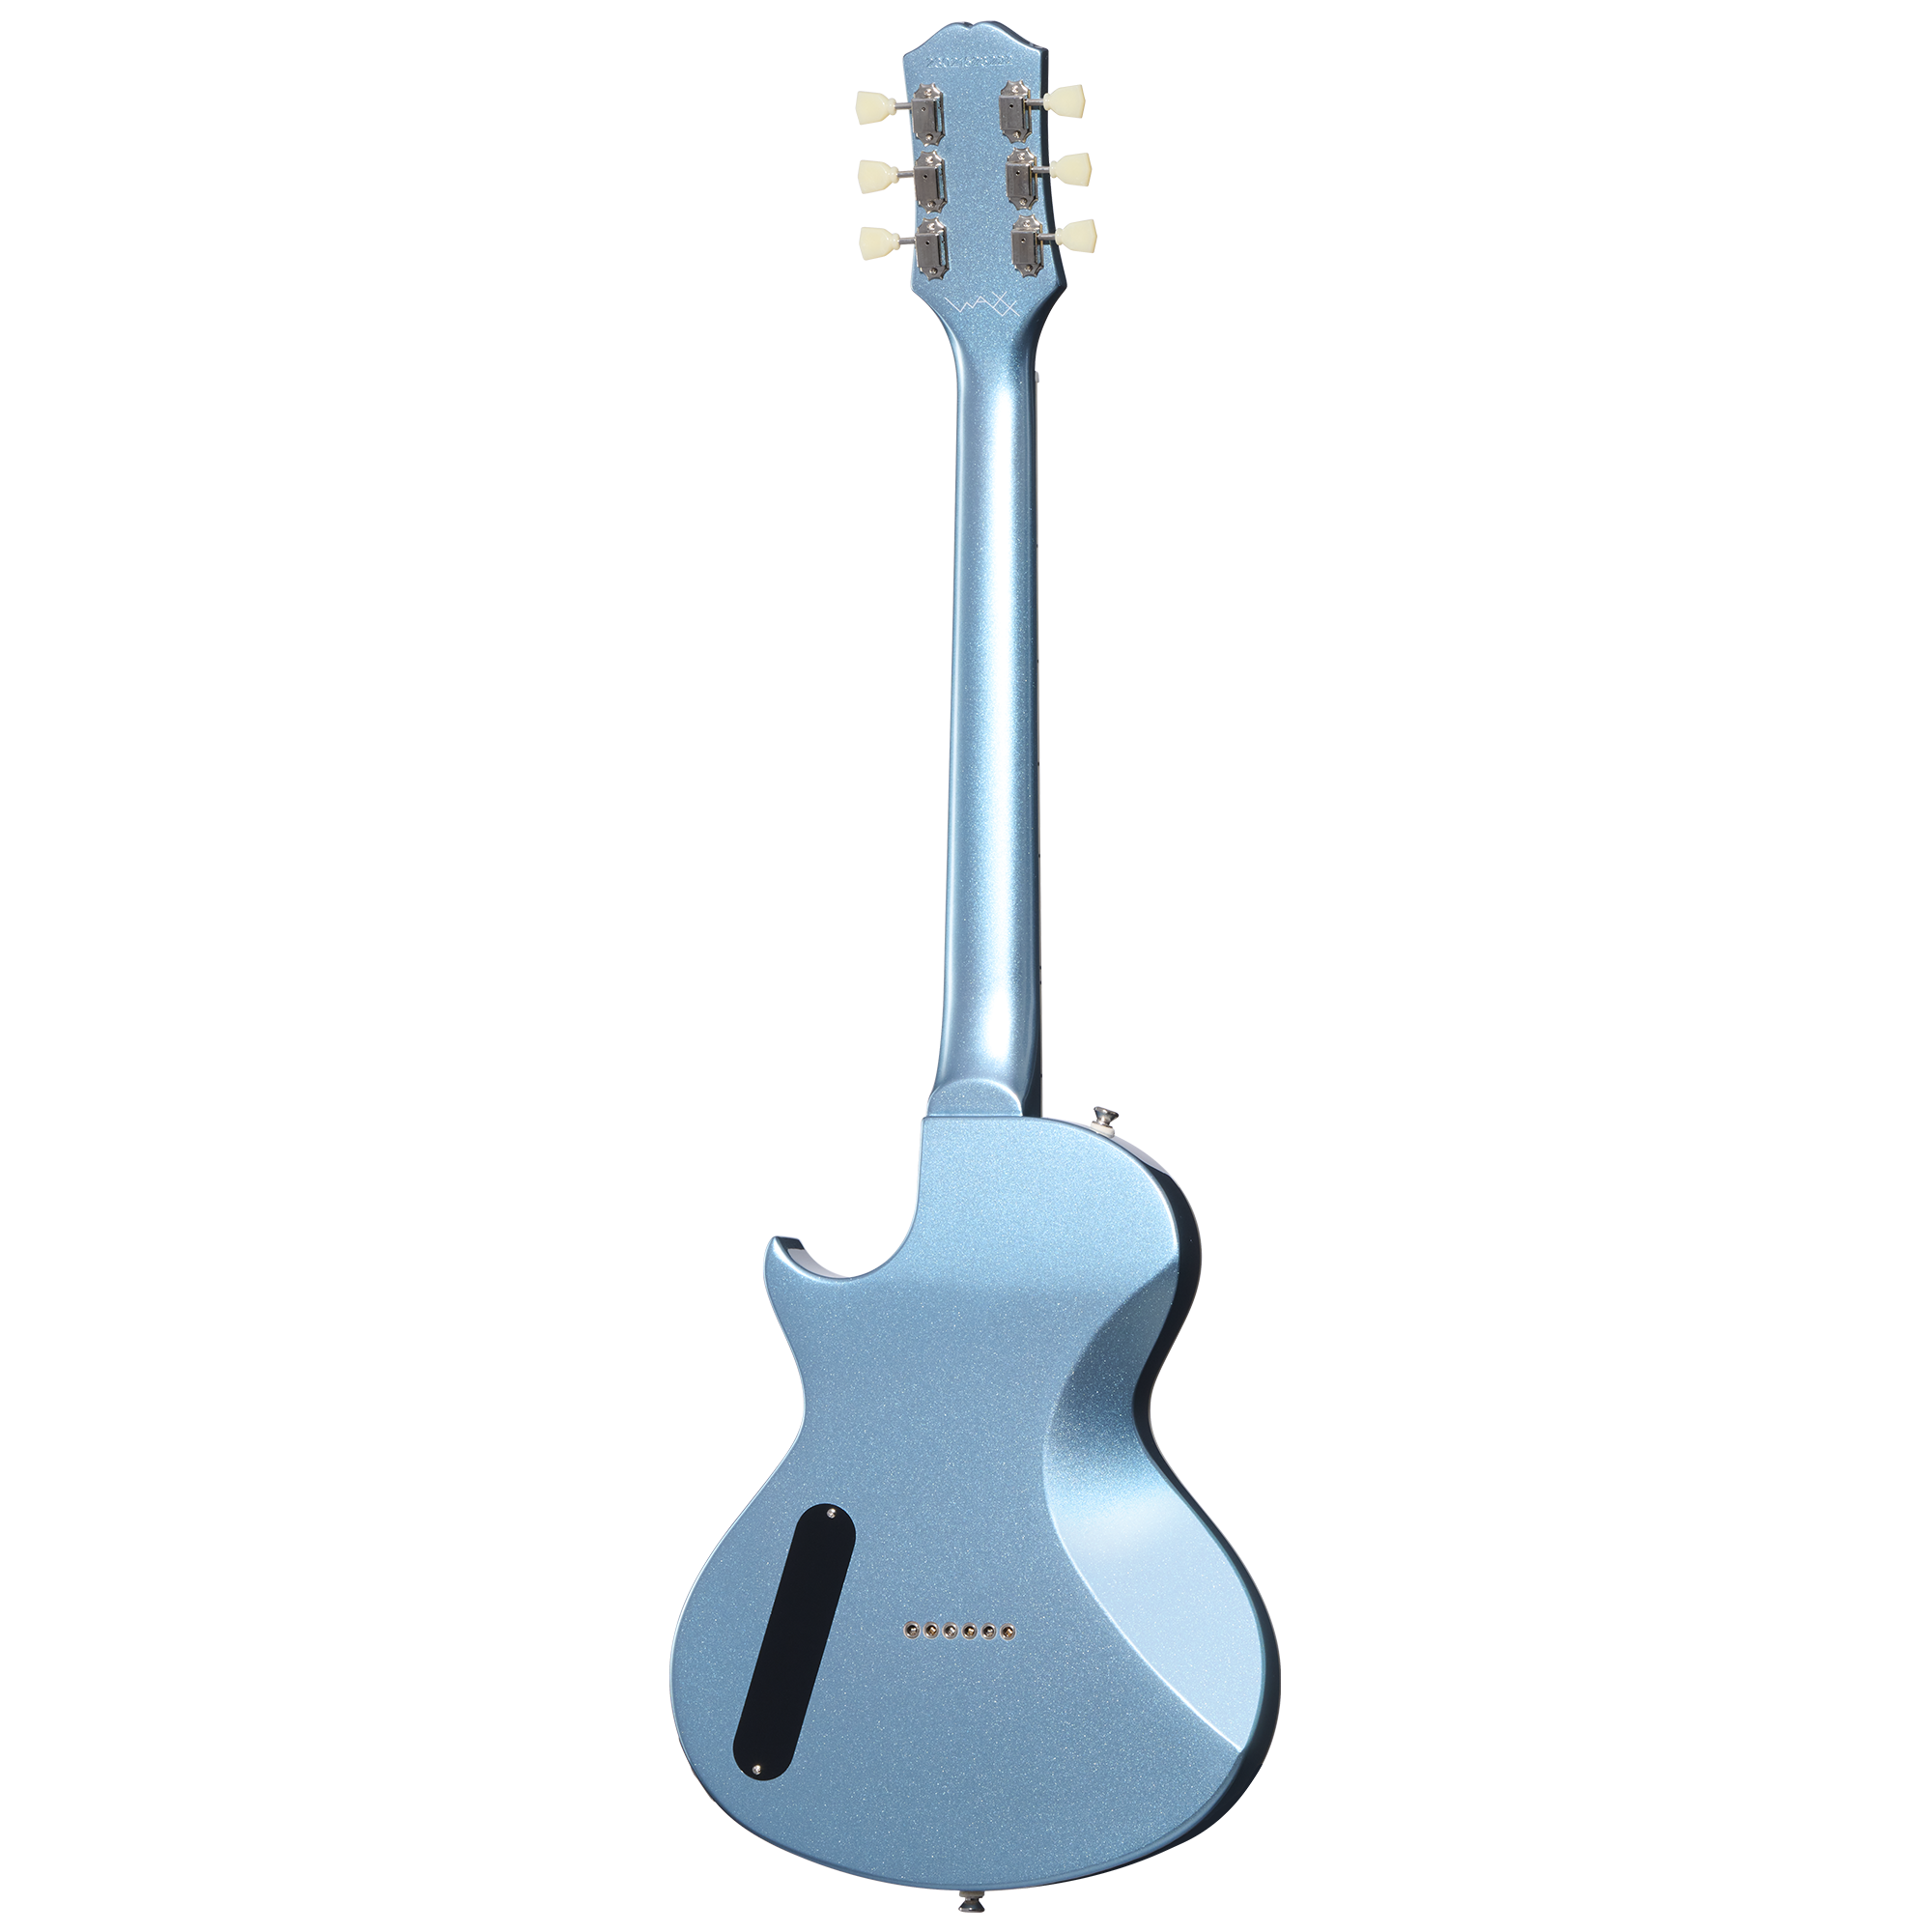 Epiphone Nighthawk Studio Waxx Hh Ht Lau - Pelham Blue - Single-Cut-E-Gitarre - Variation 1